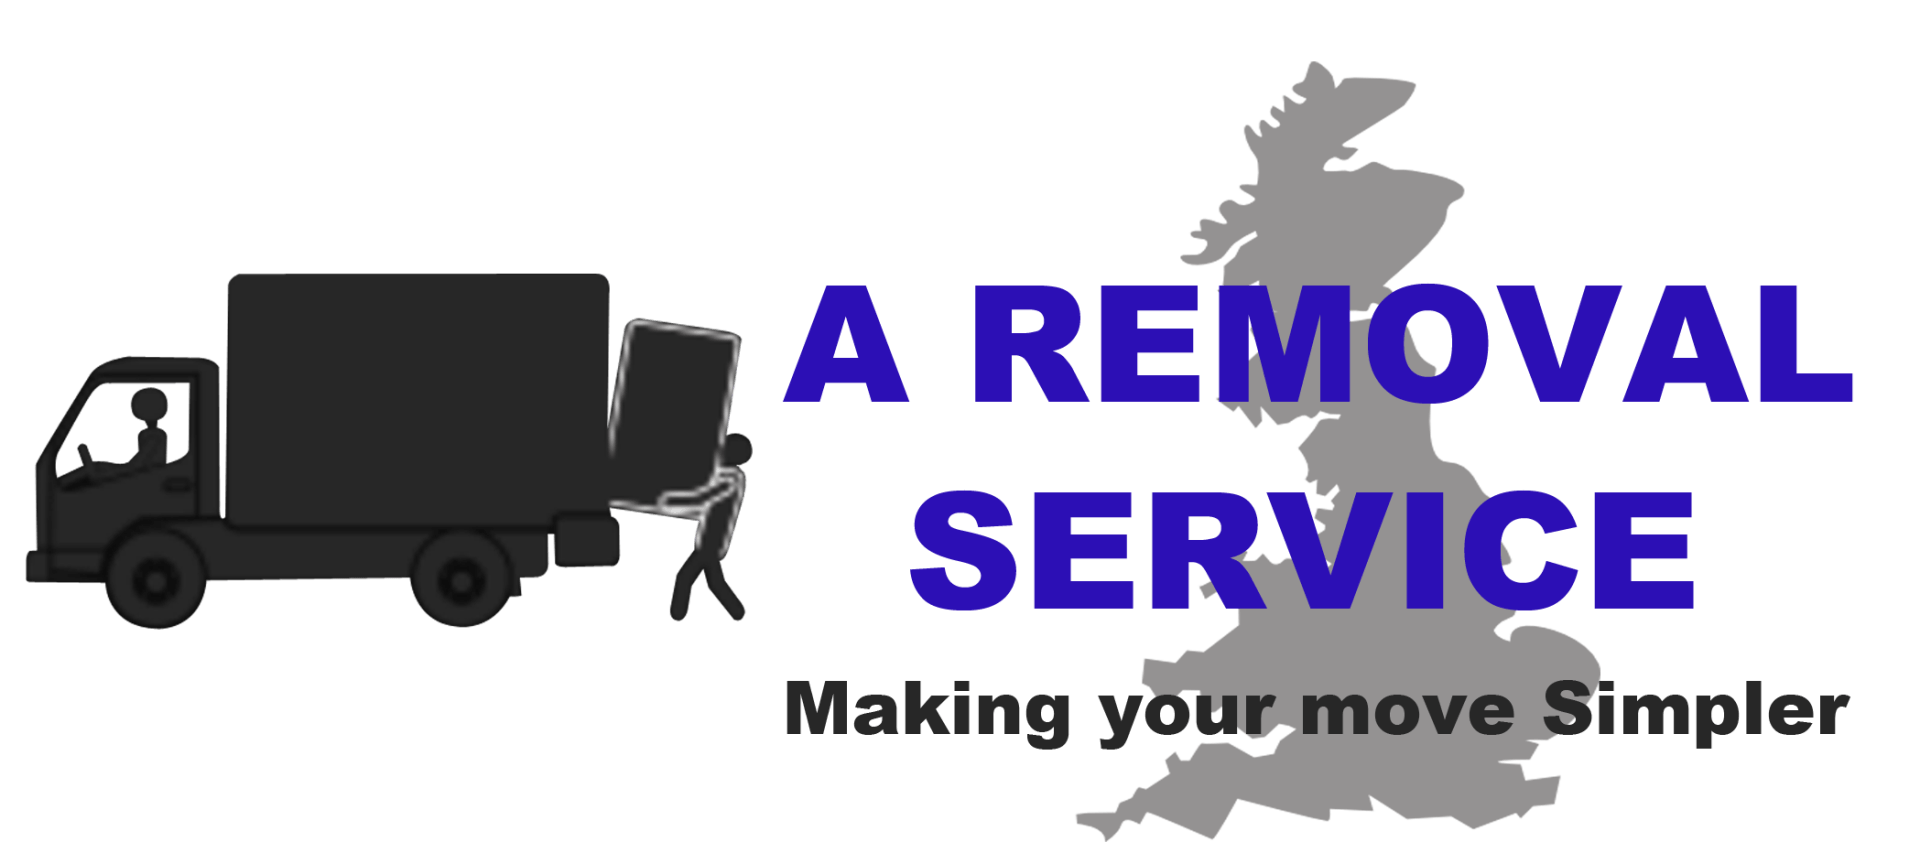 A removal service logo